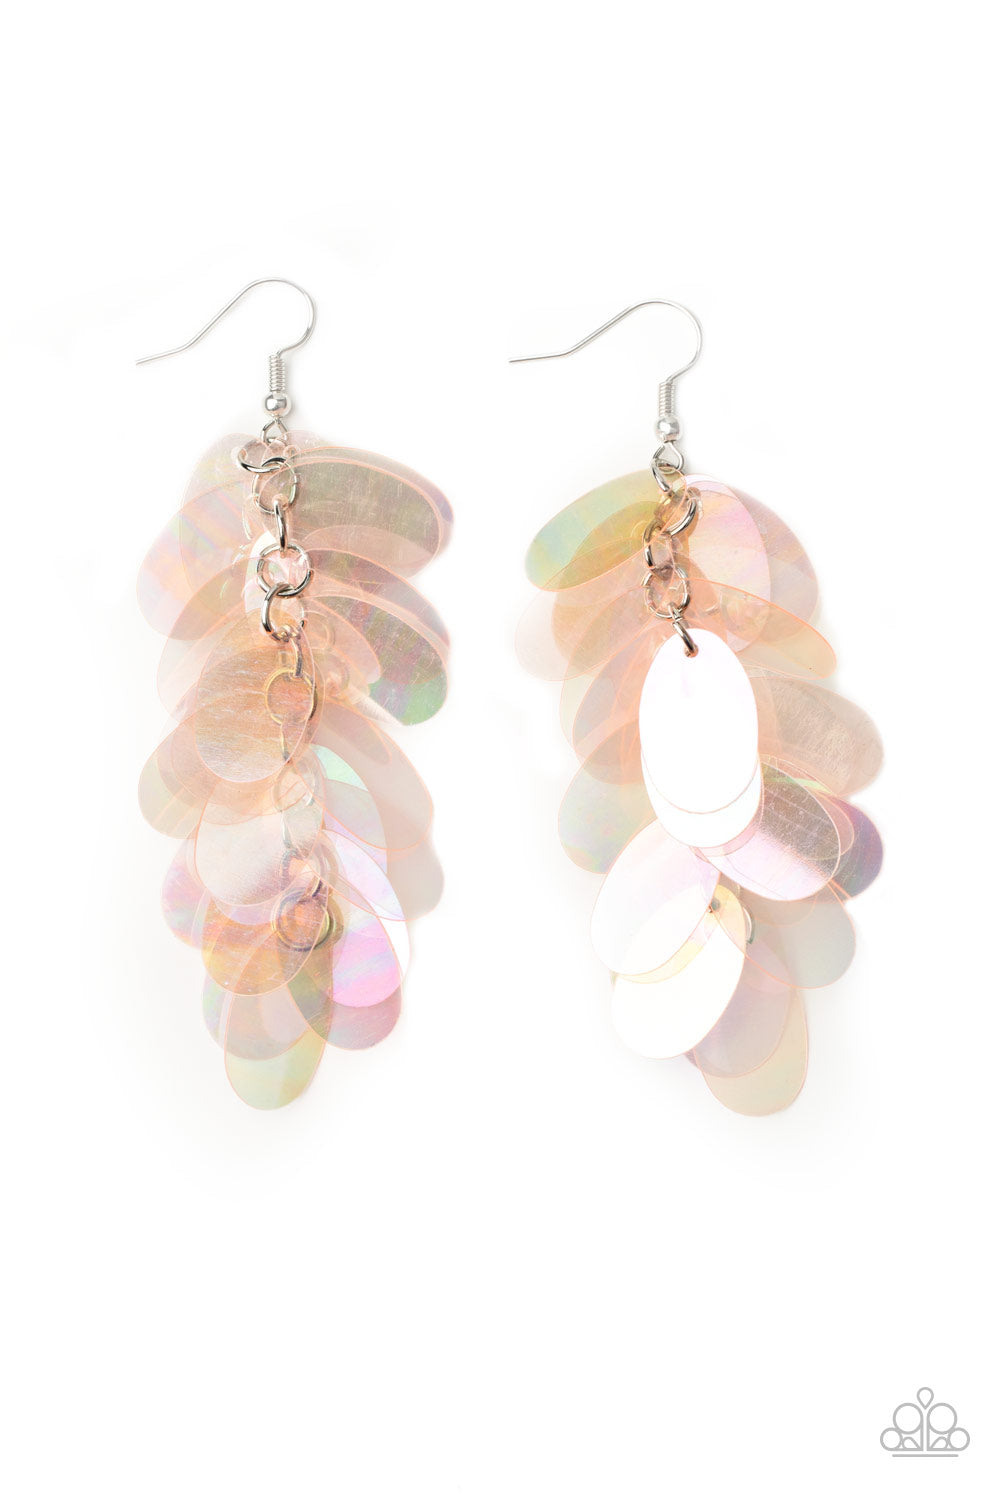 Stellar In Sequins - Pink iridescent earrings